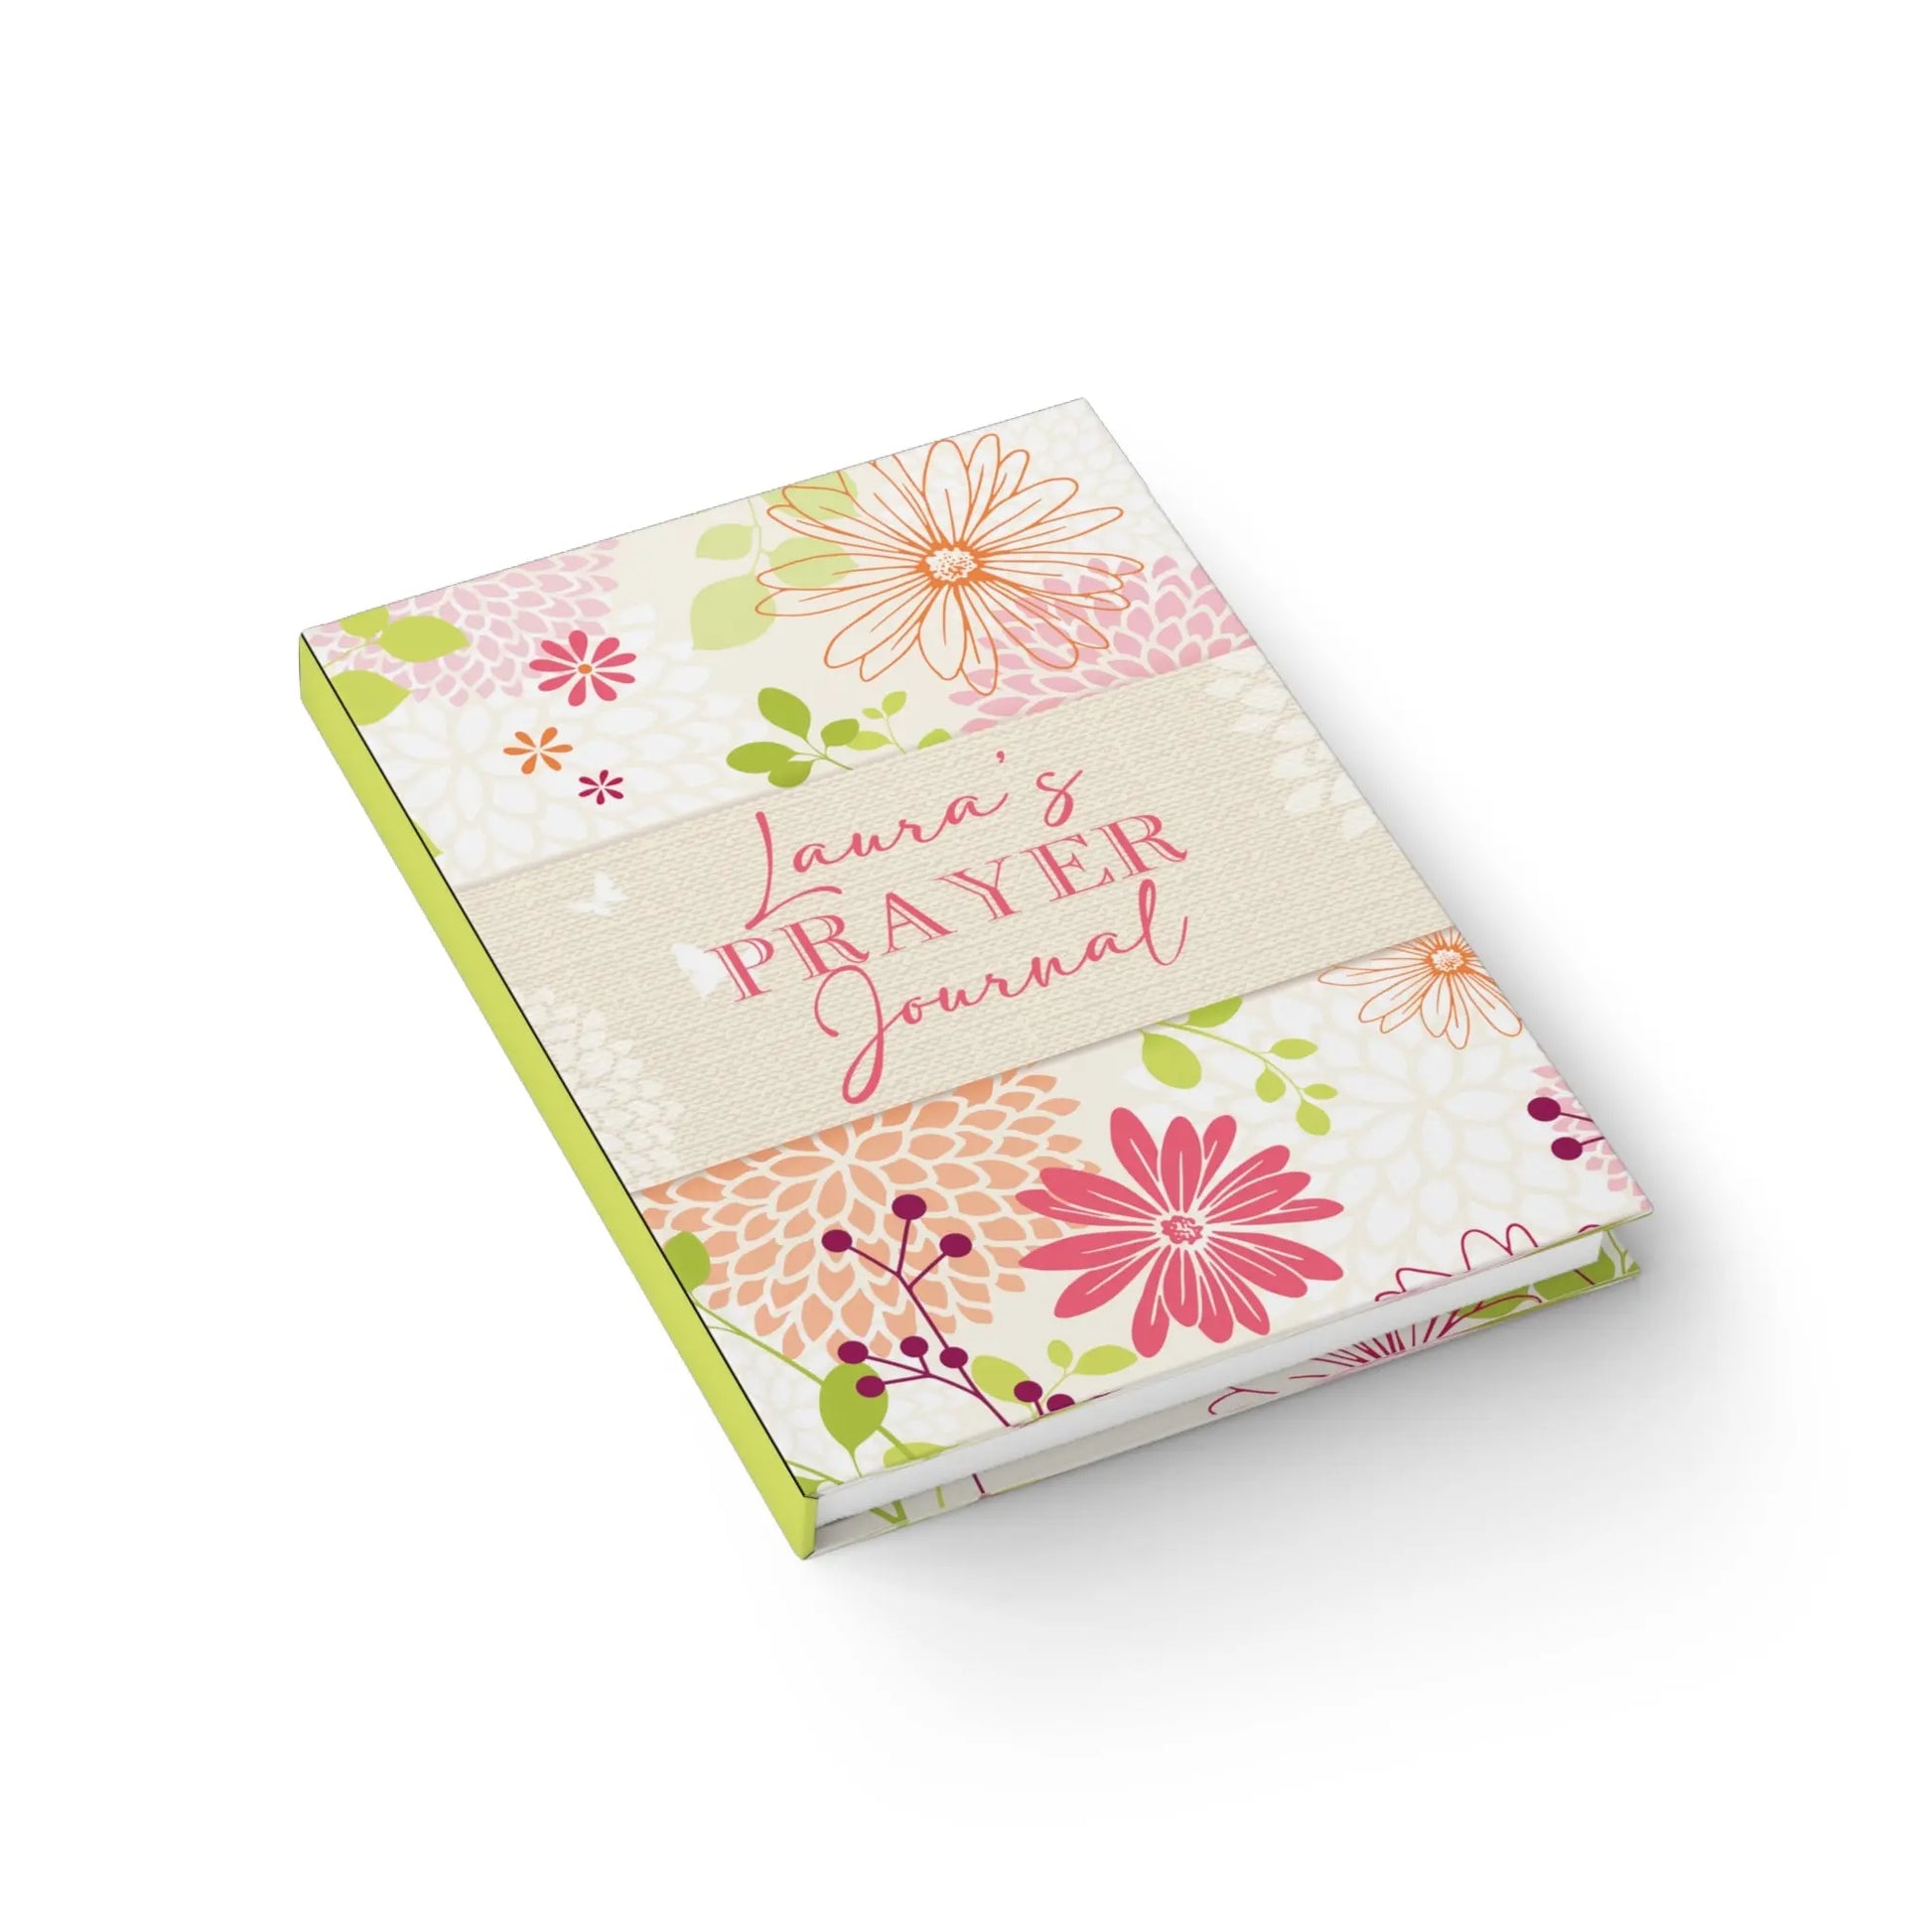 Spring Flowers Christian Prayer Journal - Ruled Line Printify